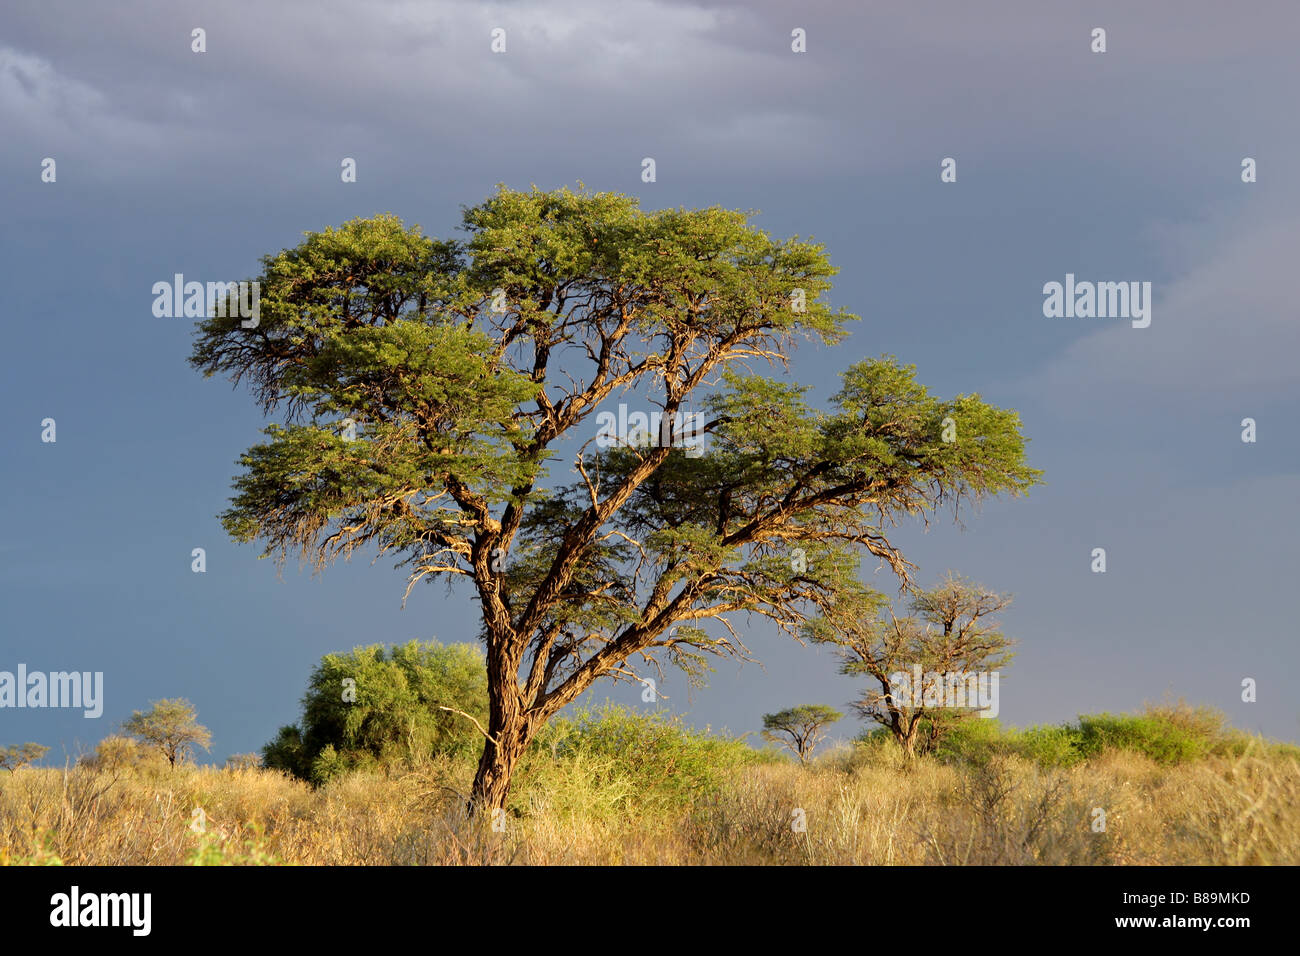 African landscape with a beautiful Acacia tree (Acacia erioloba), Kgalagadi Transfrontier Park, South Africa Stock Photo